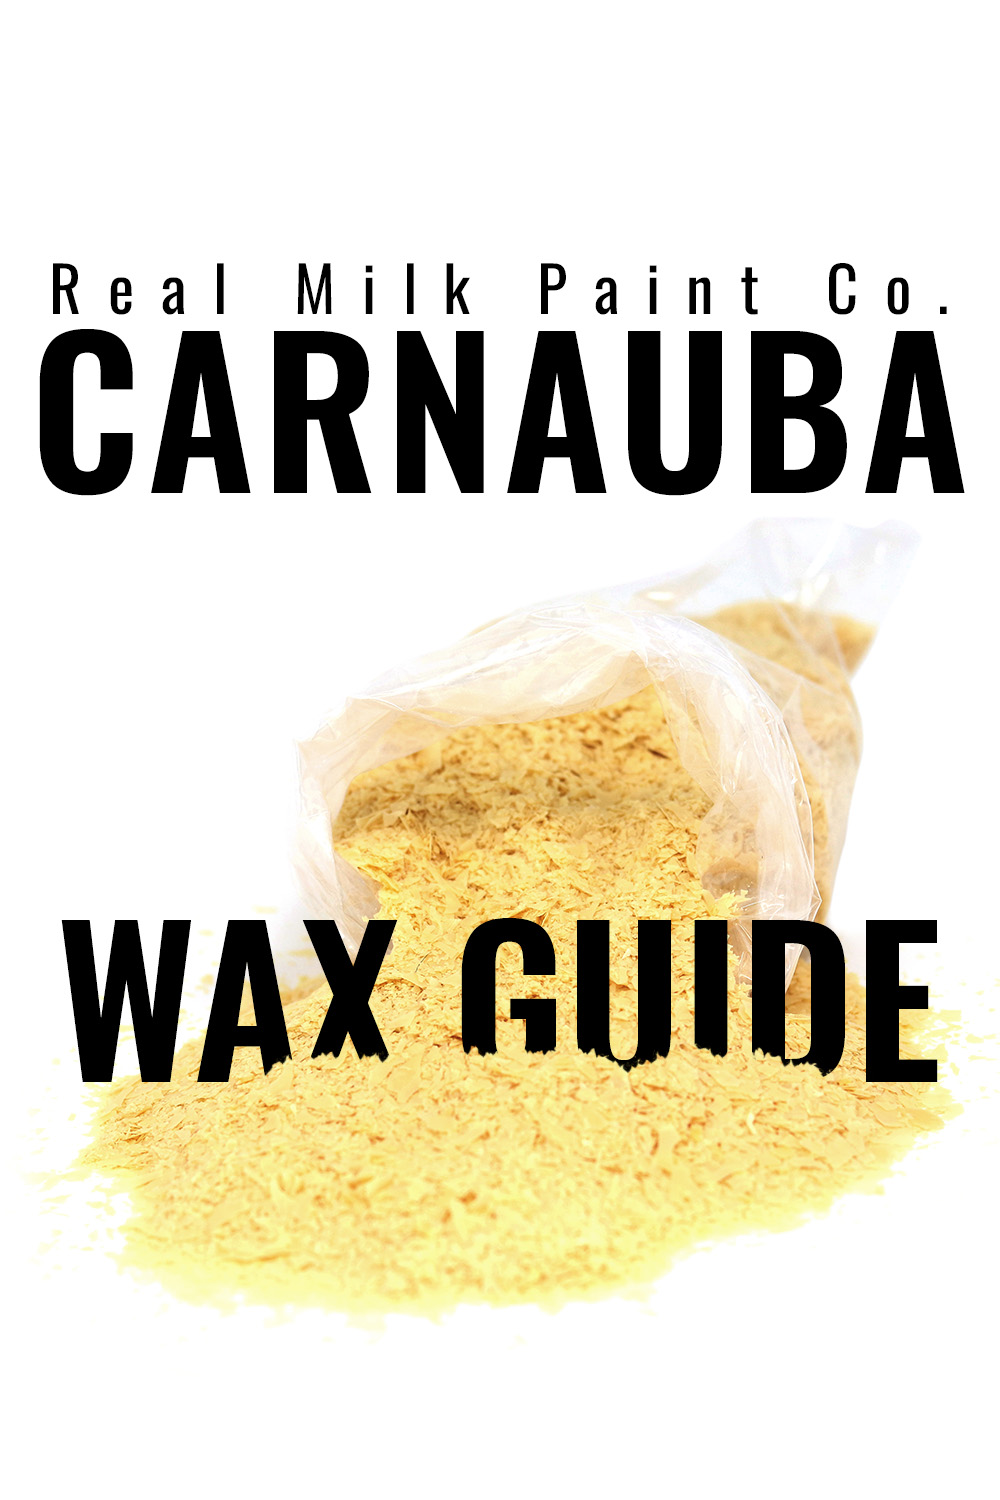 carnauba wax guide